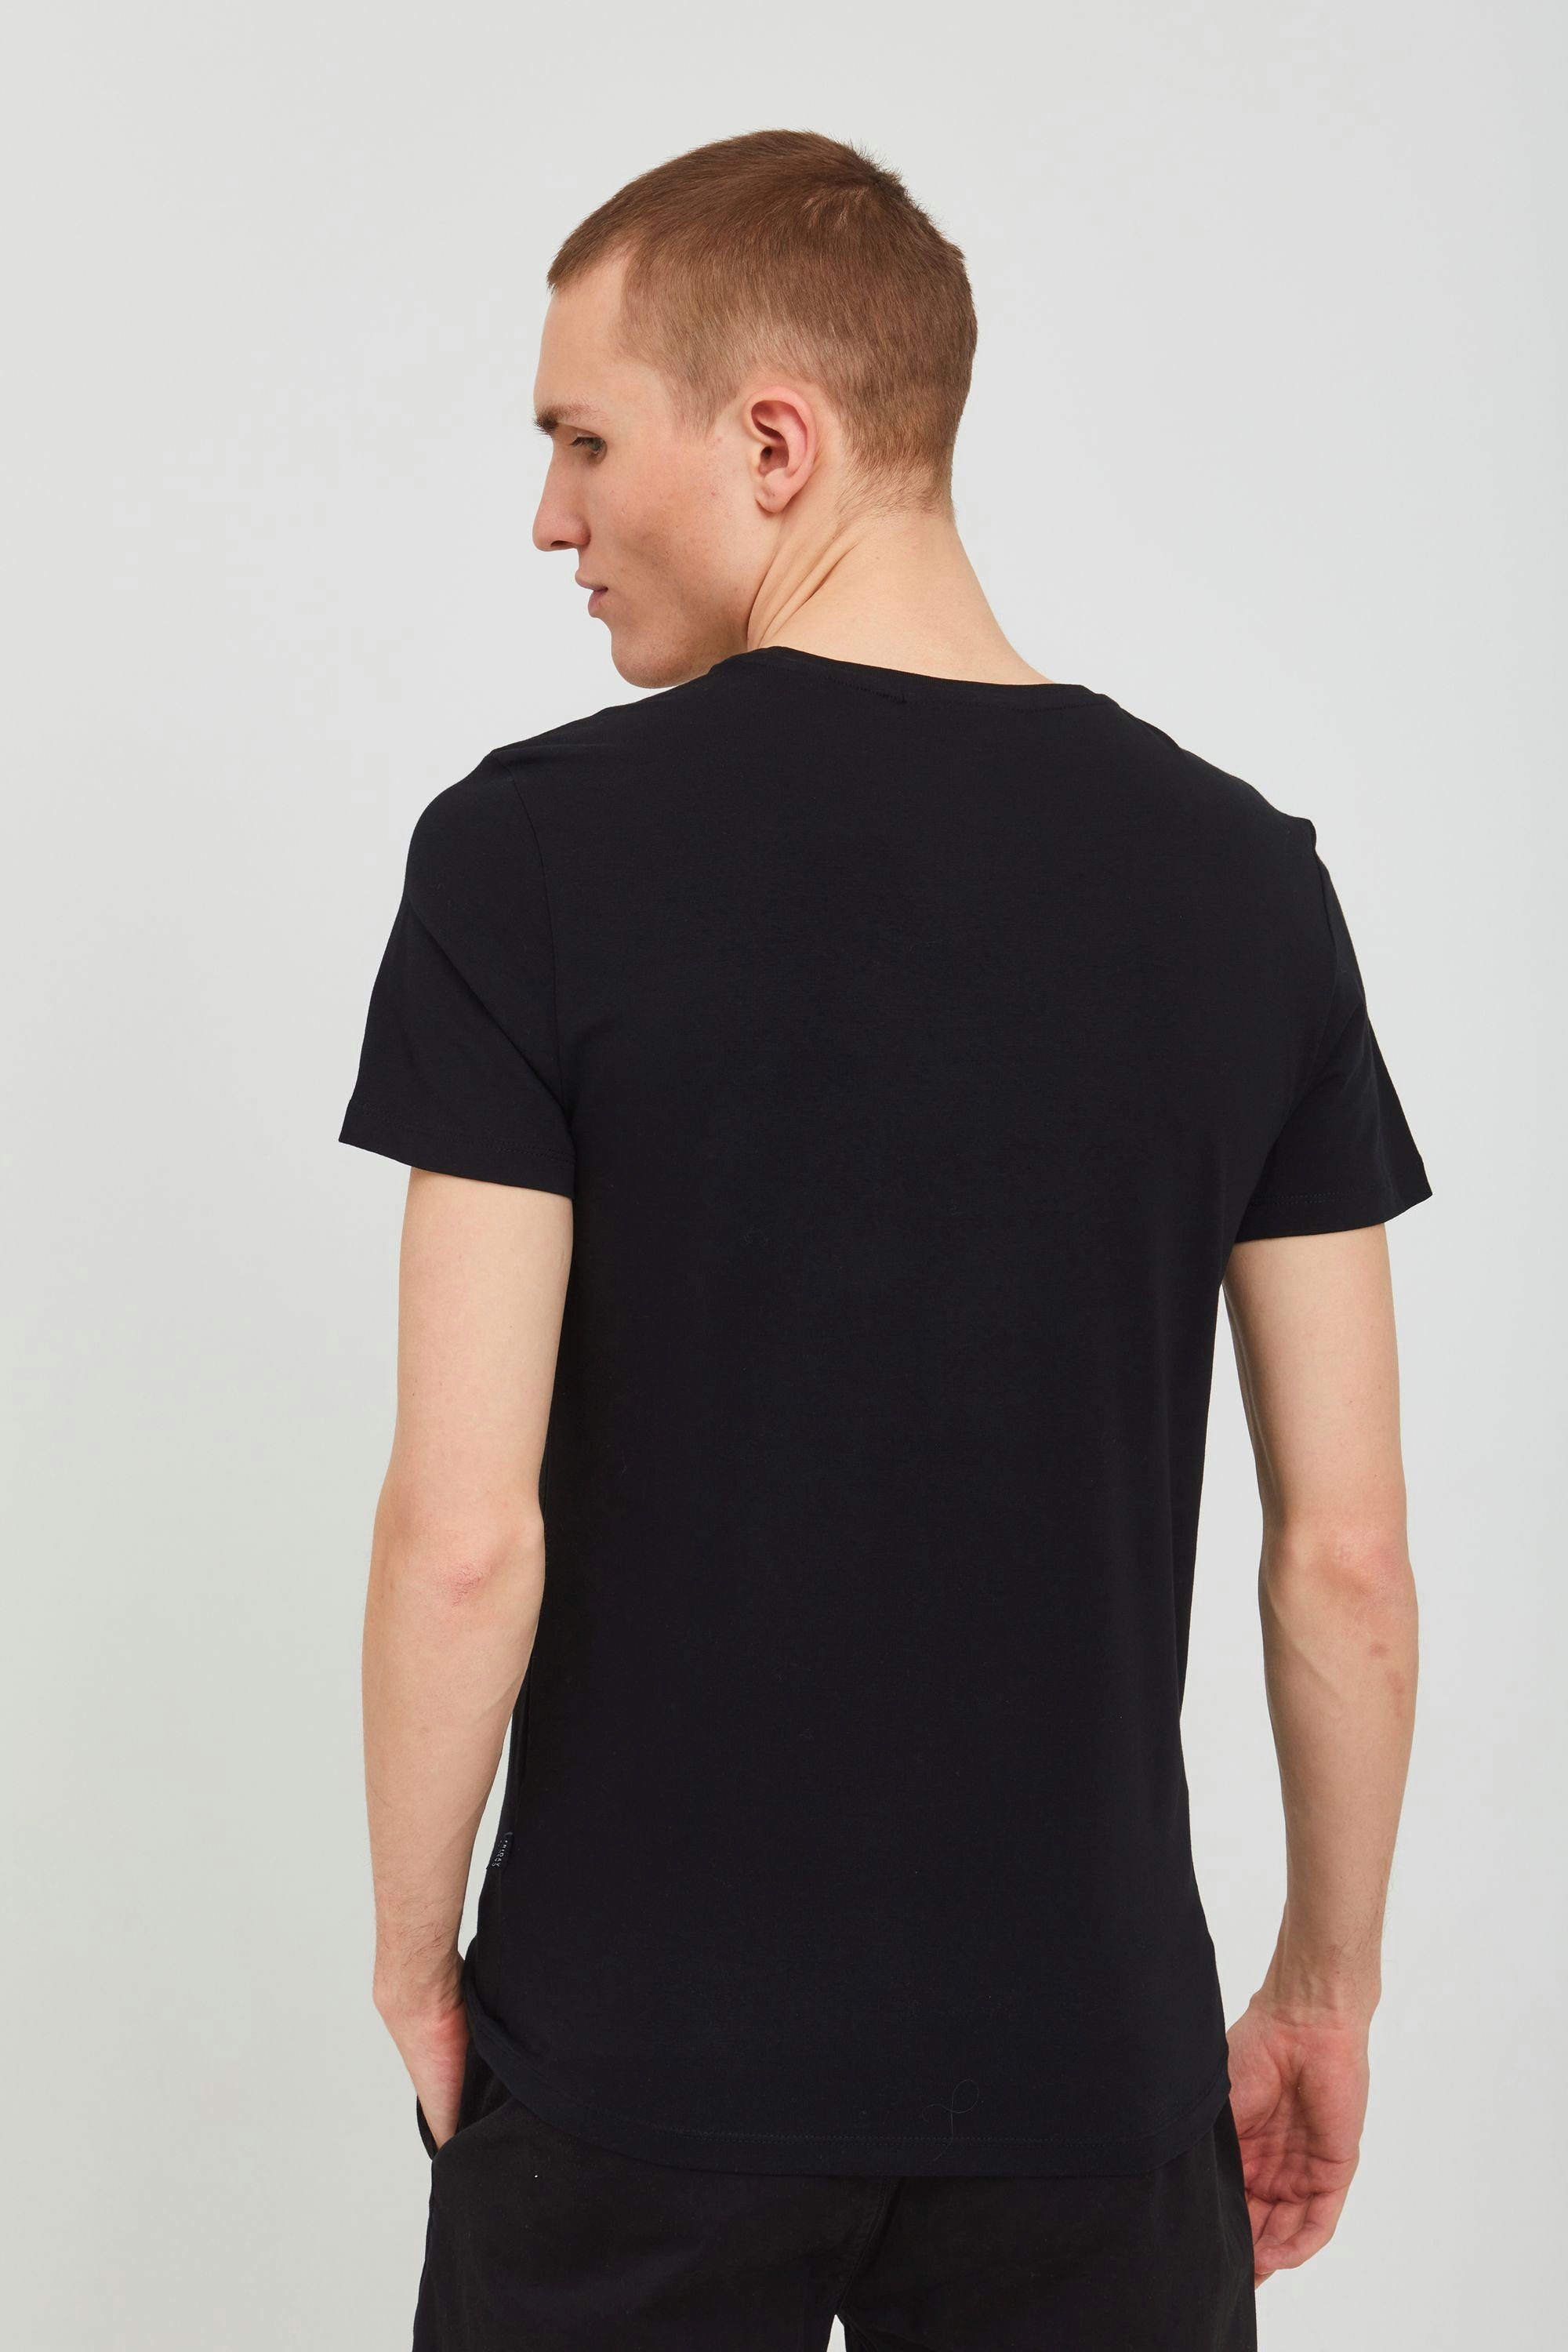 Casual Friday Black super CFDavid - 20503063 (50003) mit Shirt Klassisches T-Shirt Passform